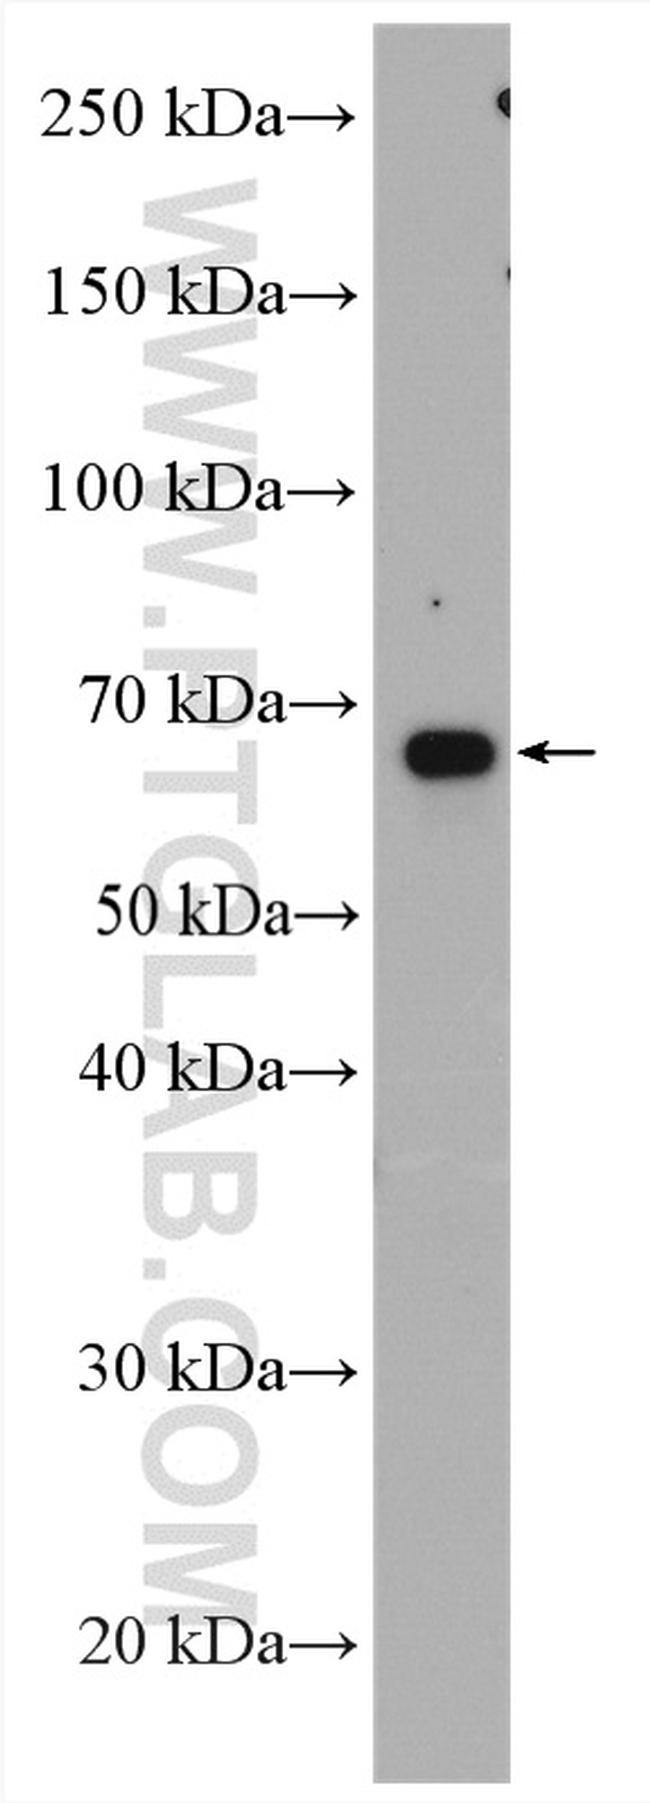 cIAP2 Antibody in Western Blot (WB)